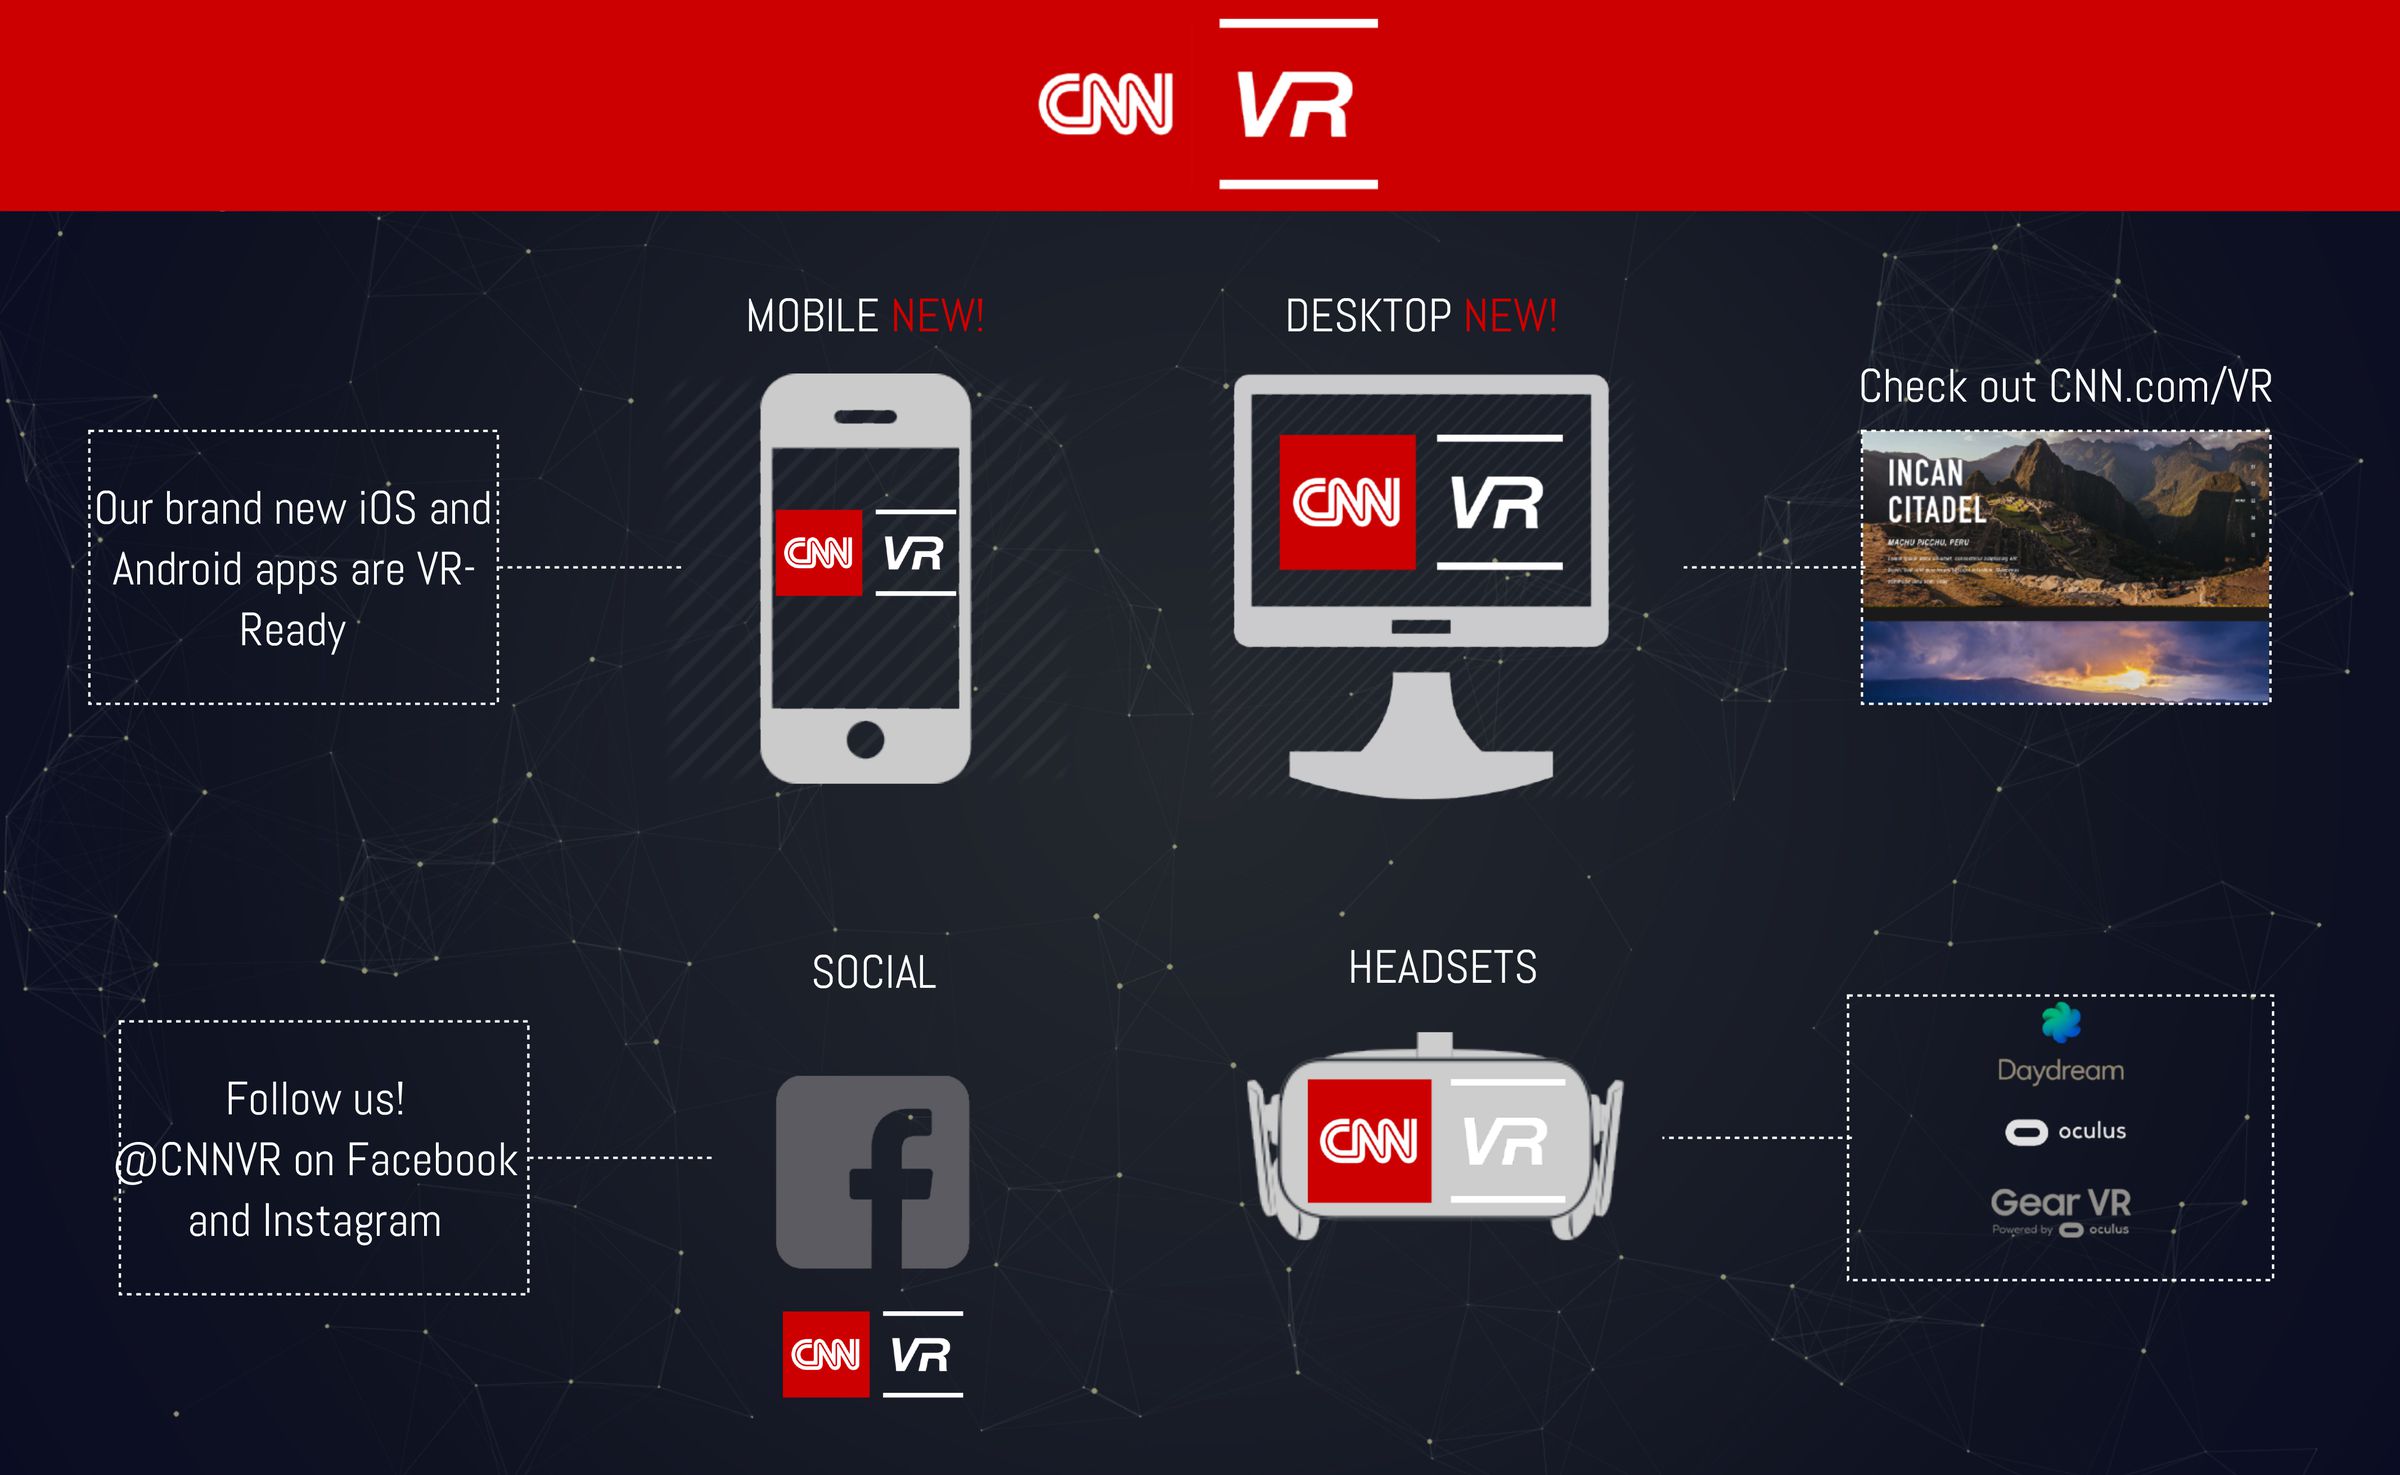 CNN’s new VR strategy